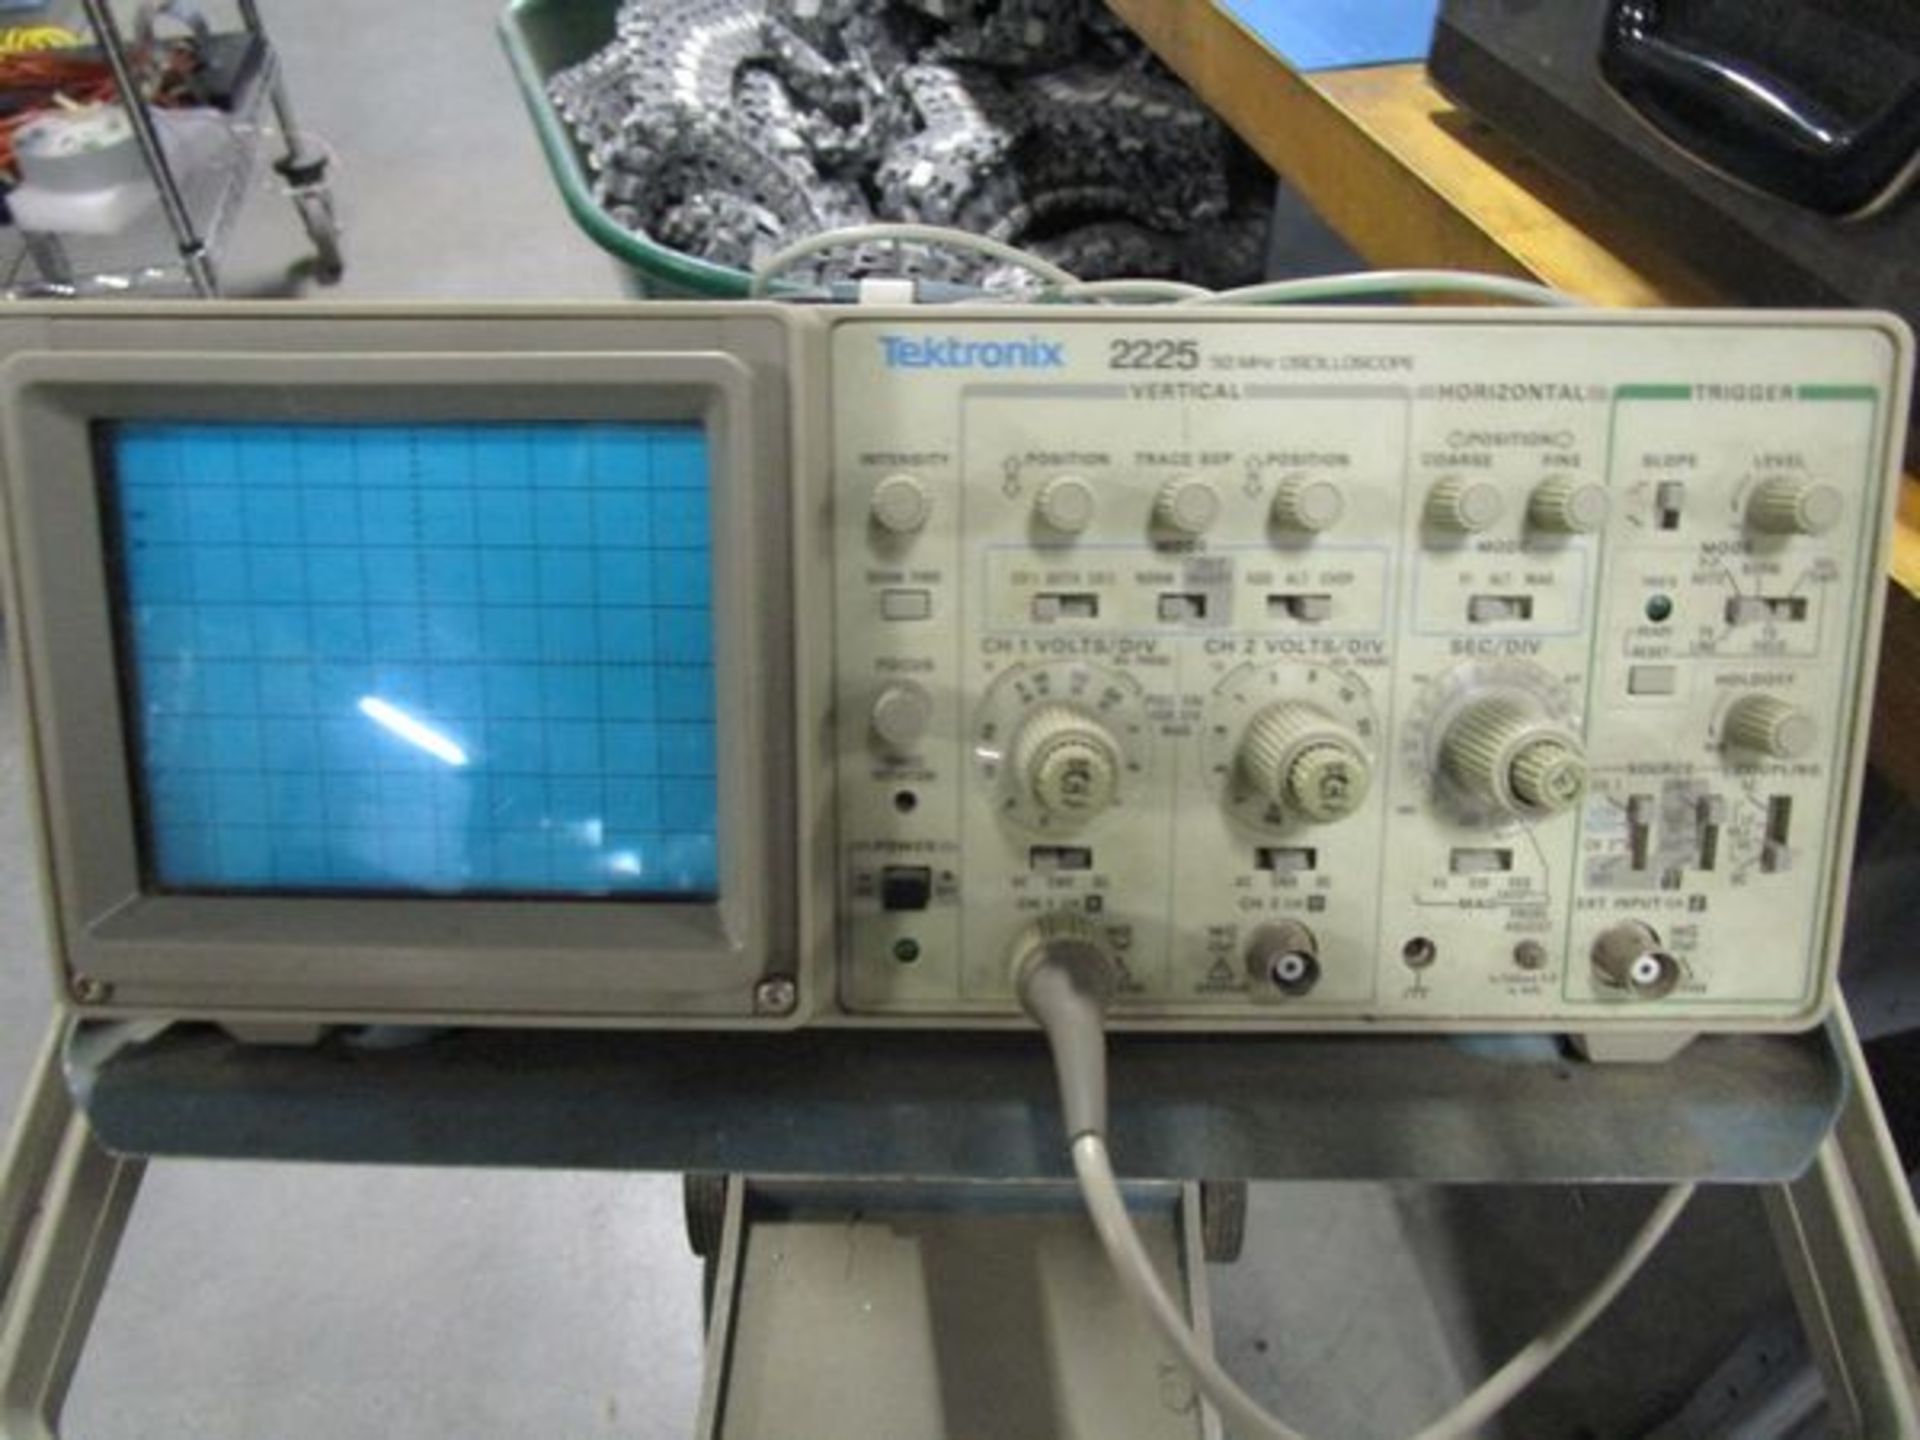 Tektronics 2225 Oscilloscope with Cart - Image 2 of 2